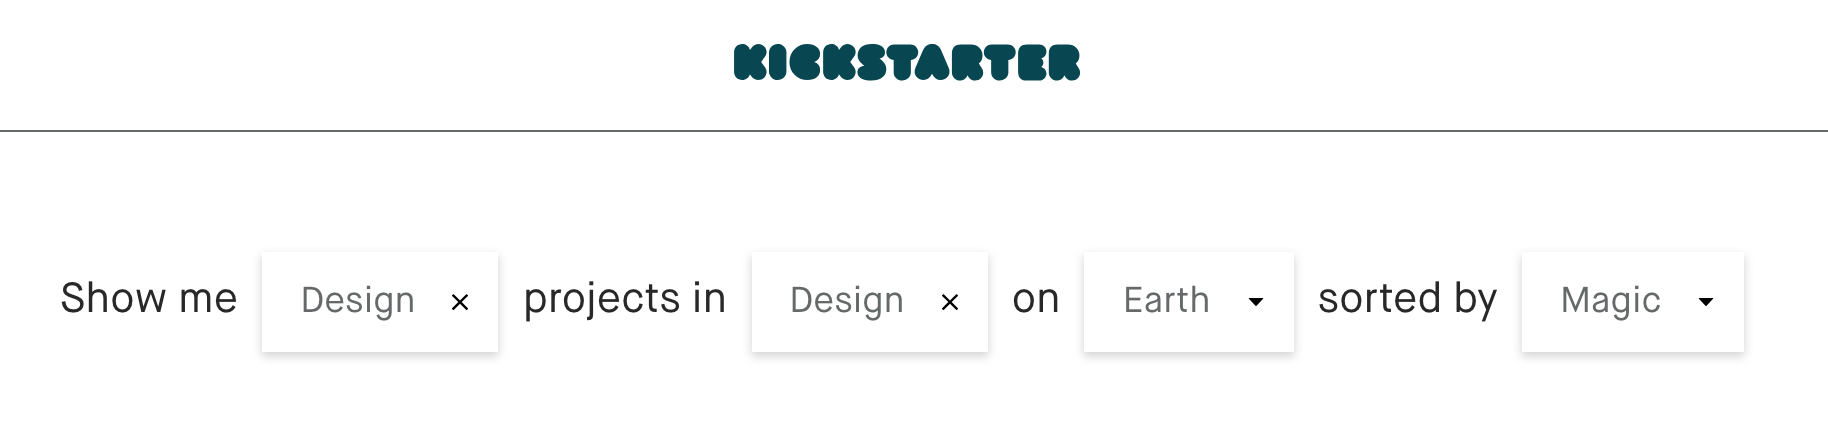 Kickstarter's search functionality